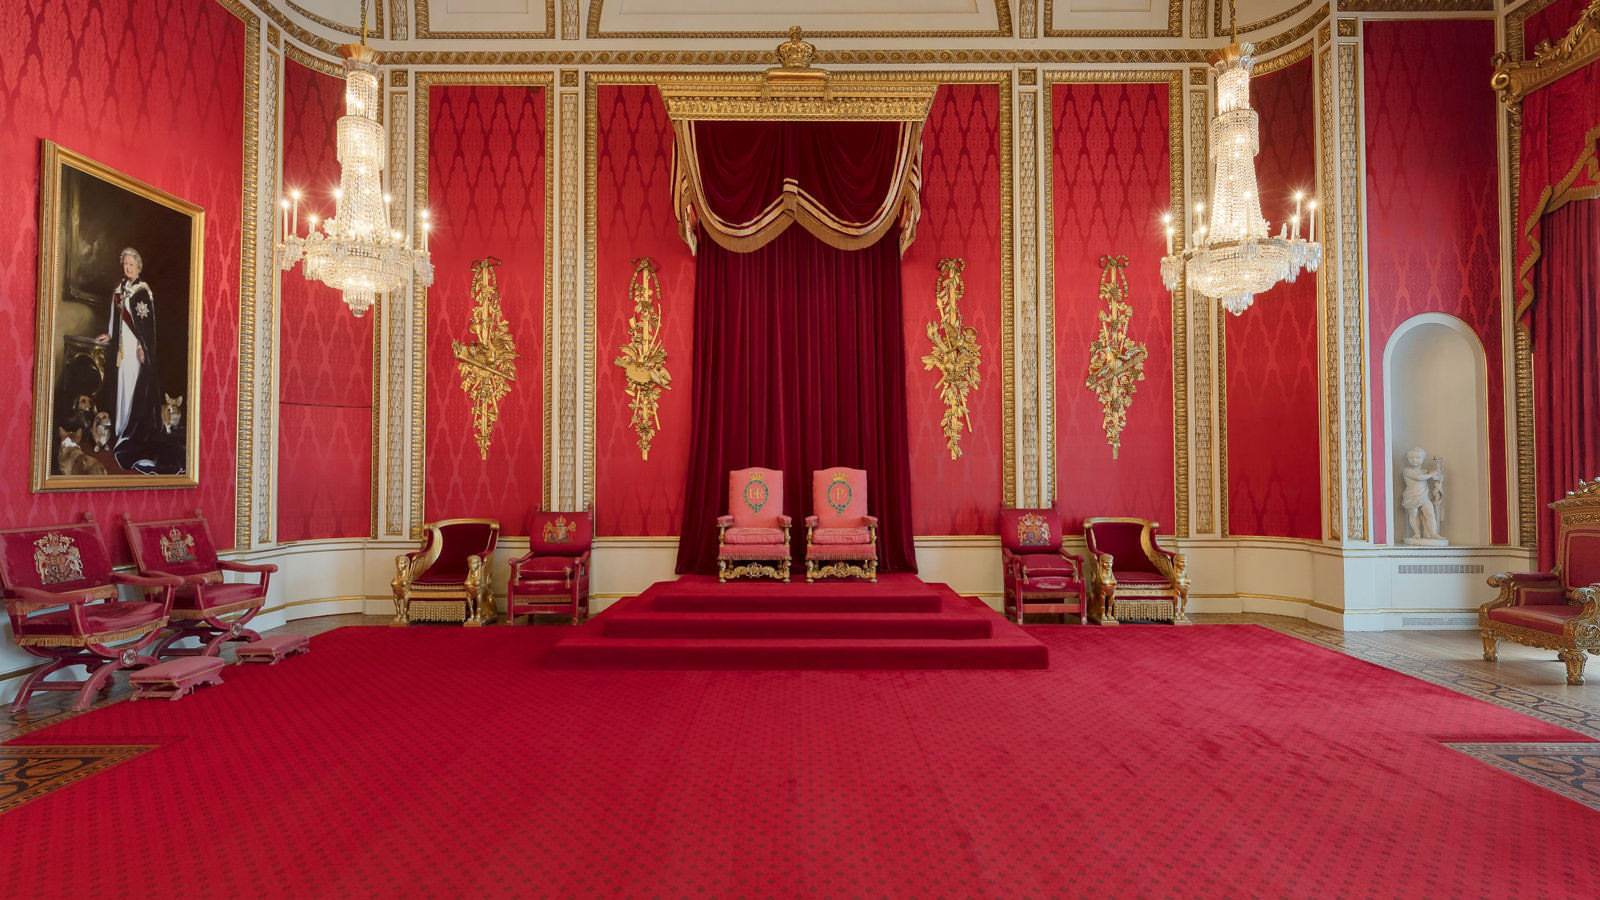 Buckingham palace EYEREVOLUTION LONDON